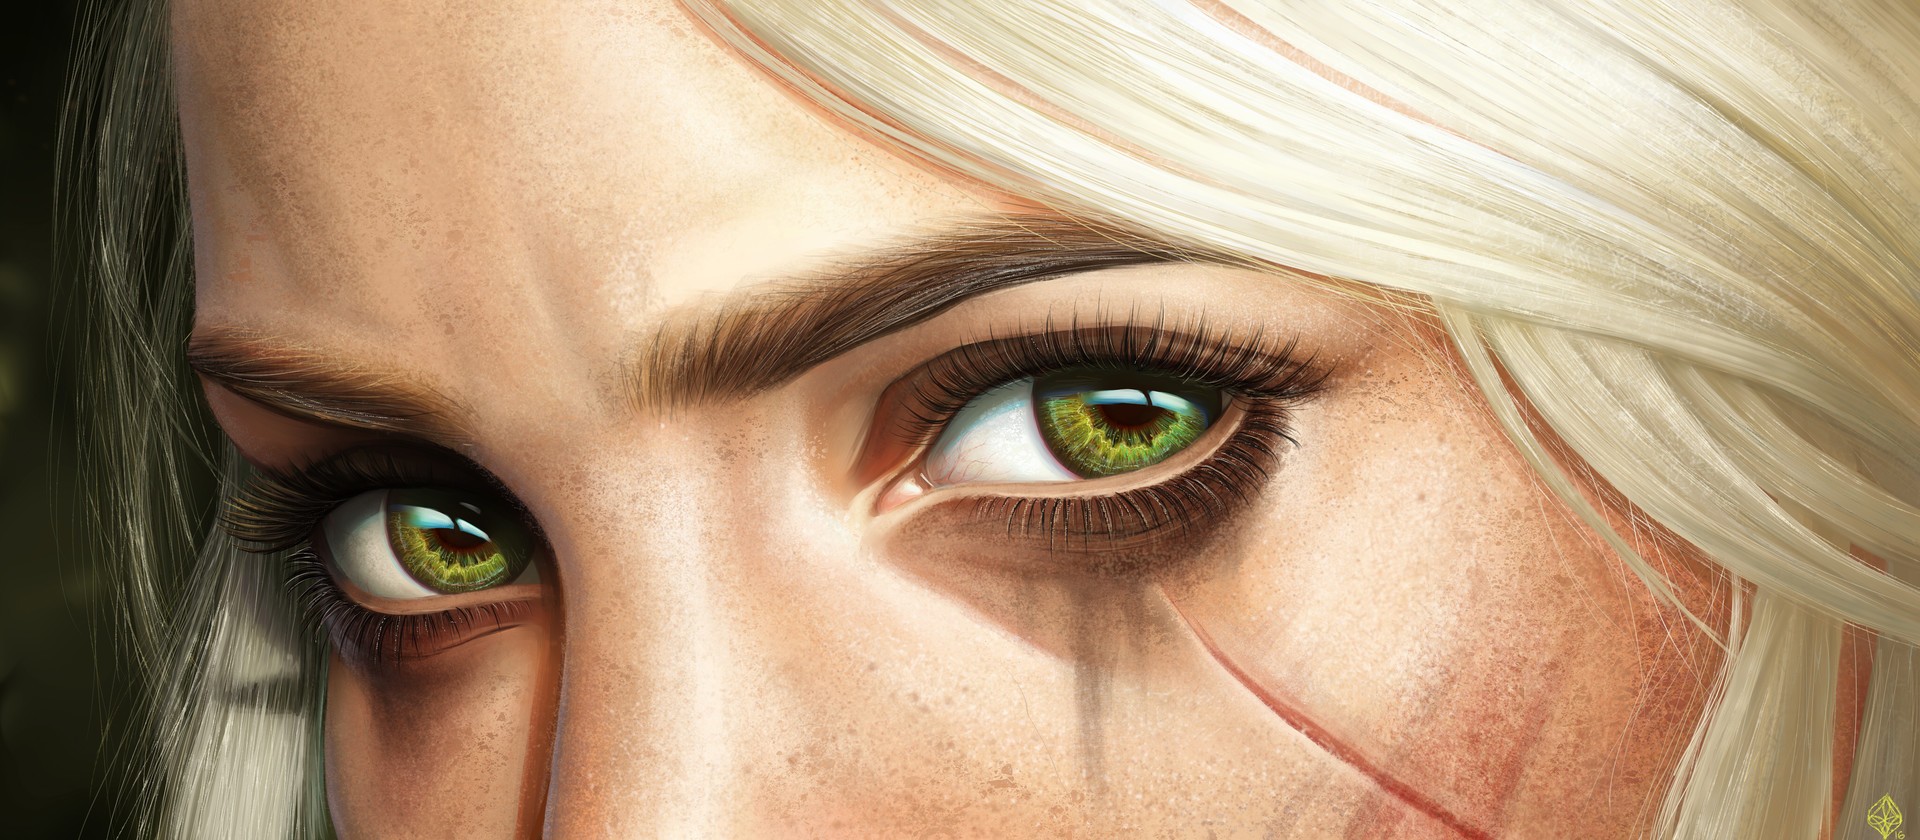 eyes, Cirilla Fiona Elen Riannon, Digital art, Closeup, The Witcher 3: Wild Hunt, Ciri Wallpaper